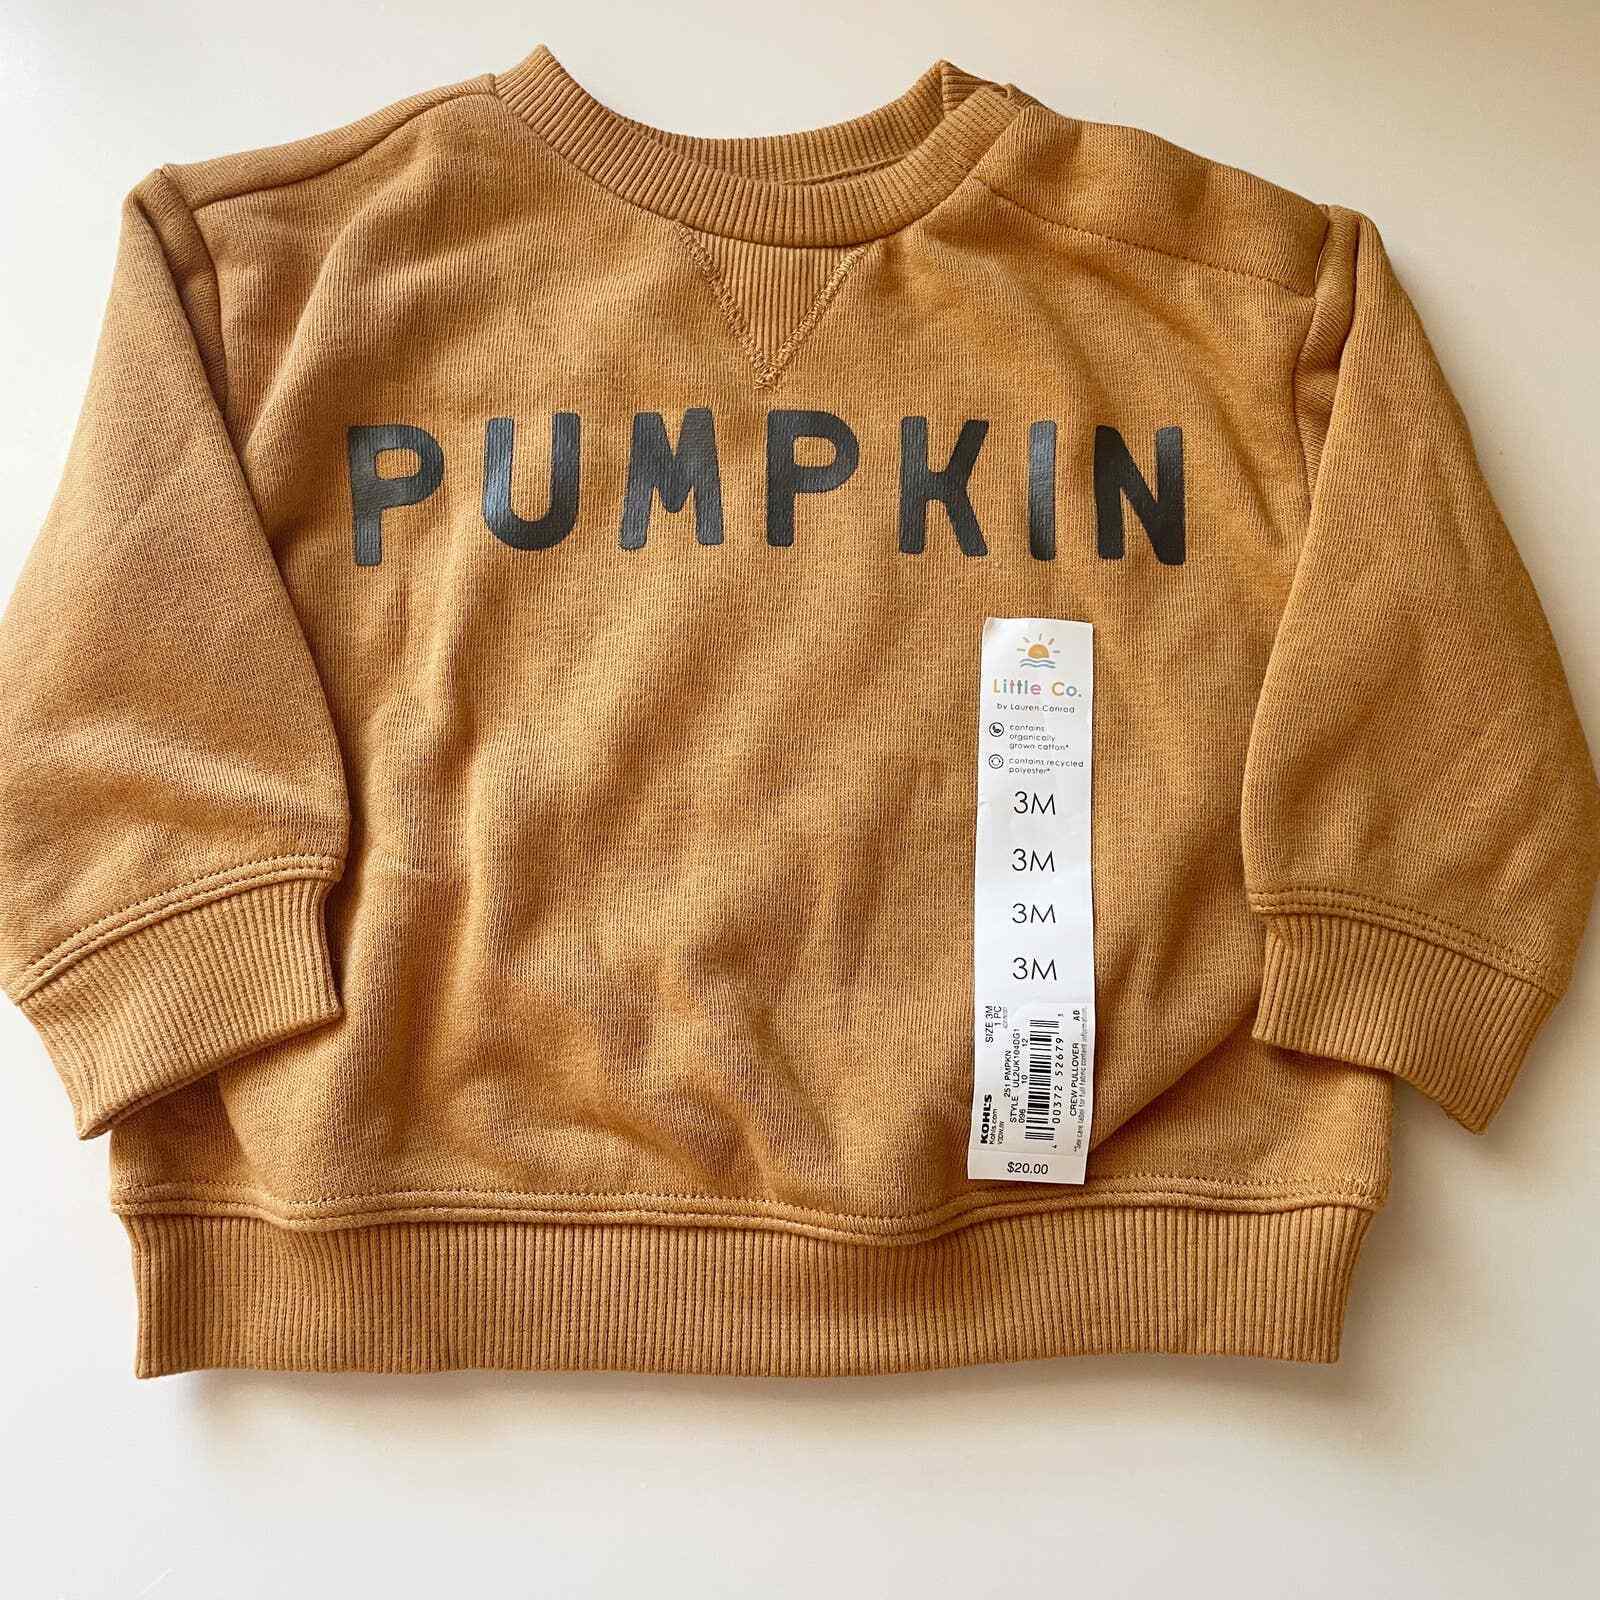 Little Co. Pumpkin Pullover Sweatshirt / Size: 3 Months Lauren Conrad